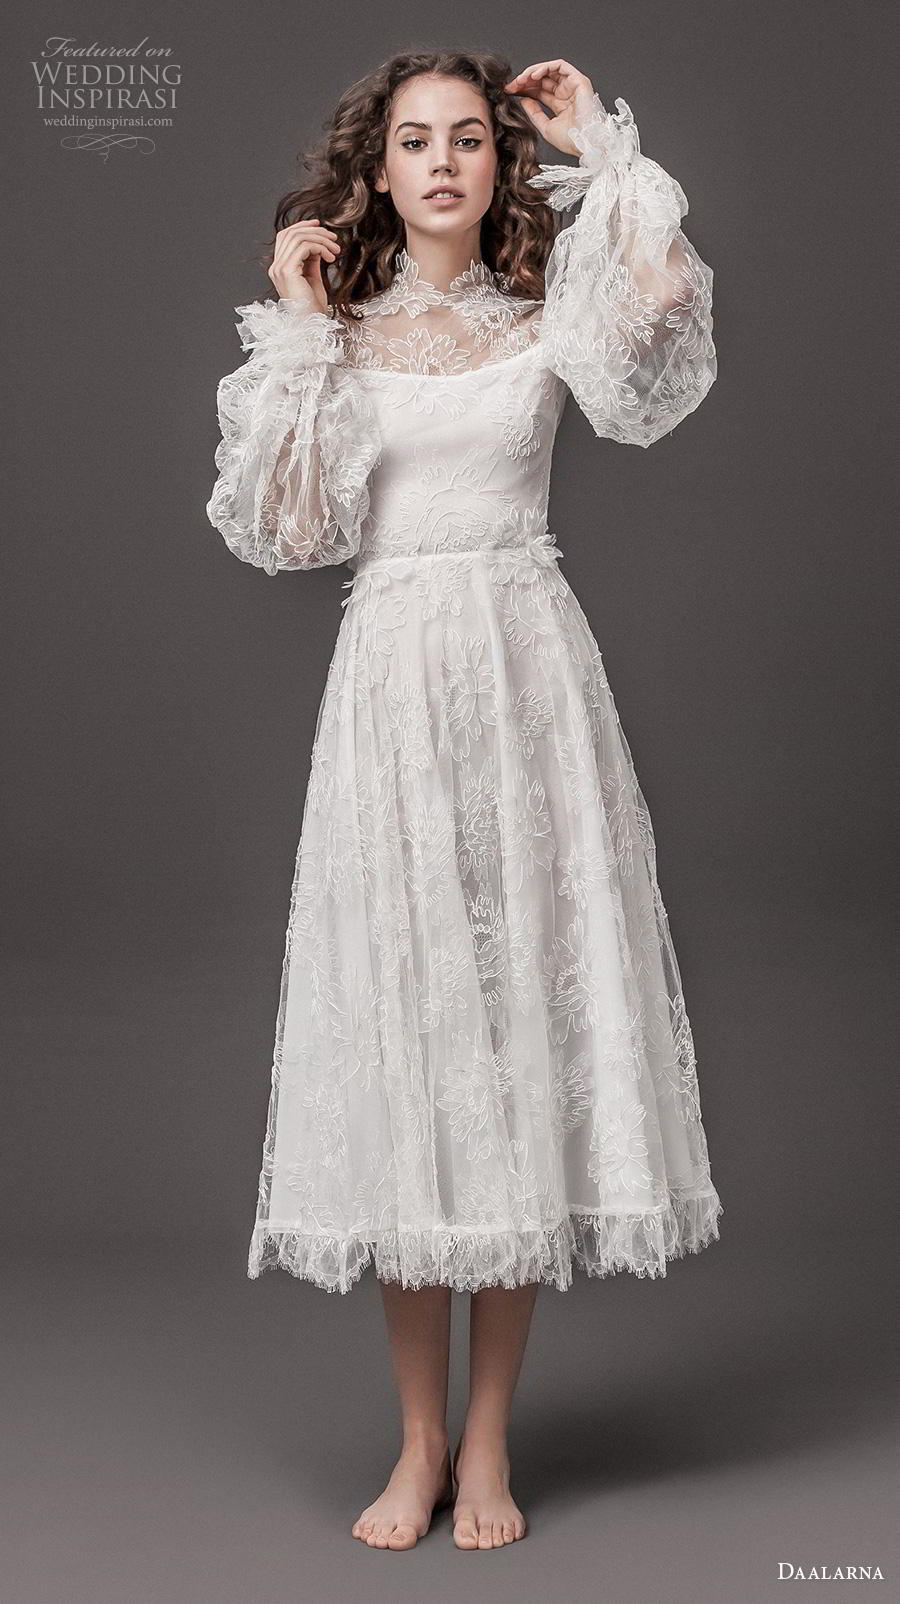 daalarna 2020 bridal long poet sleeves illusion high neck full embellishement romantic vintage tea length short wedding dress lace button back (14) mv